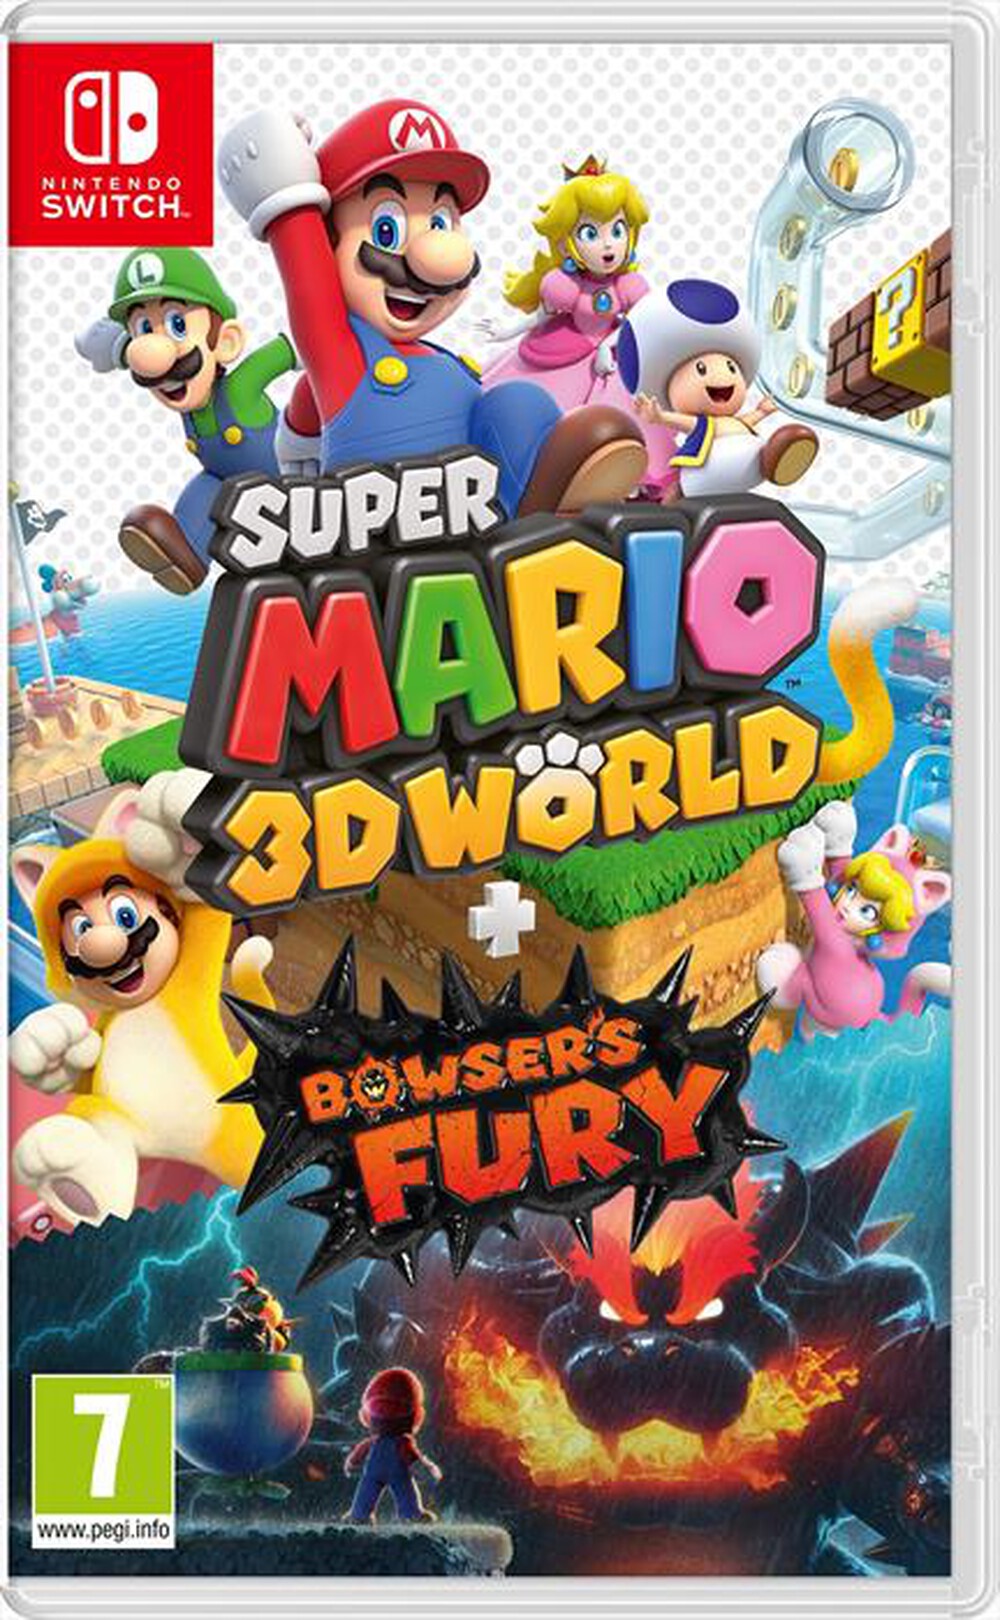 "NINTENDO - Super Mario 3D World + Bowser's Fury"